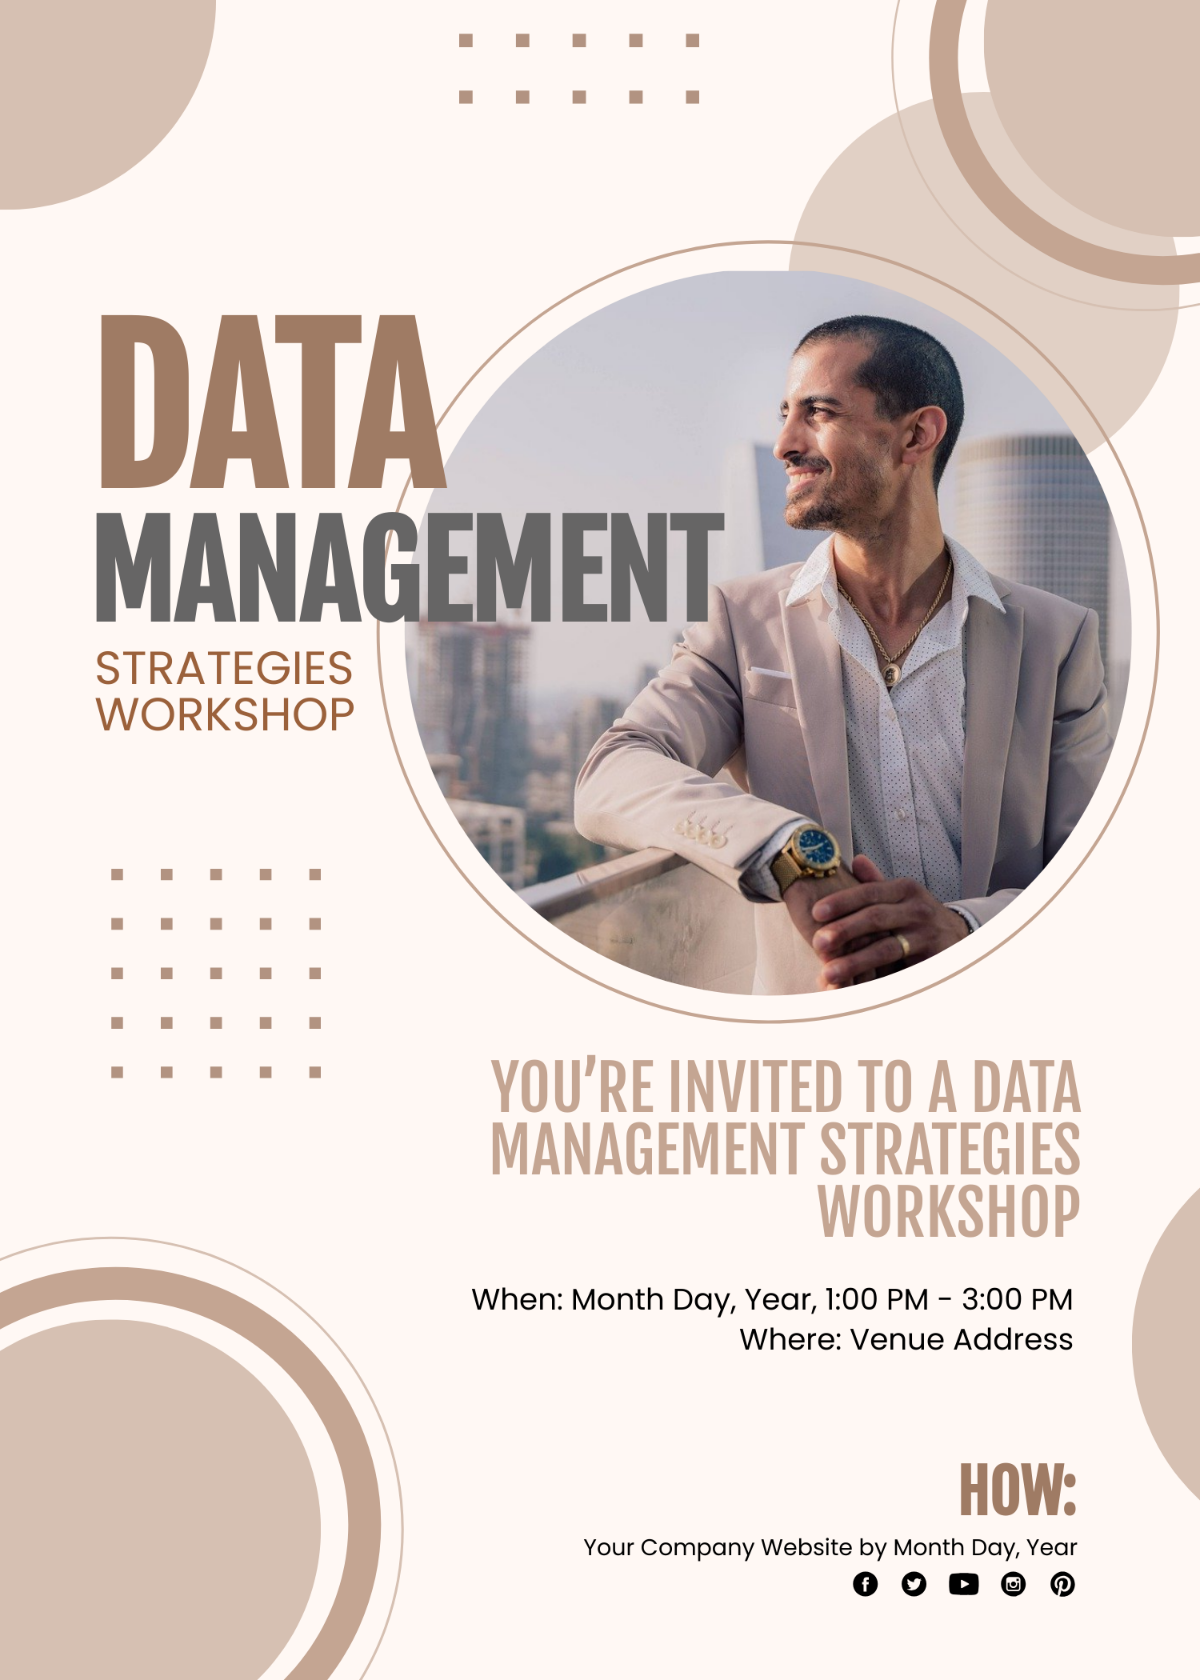 Data Management Strategies Workshop Invitation Card Template